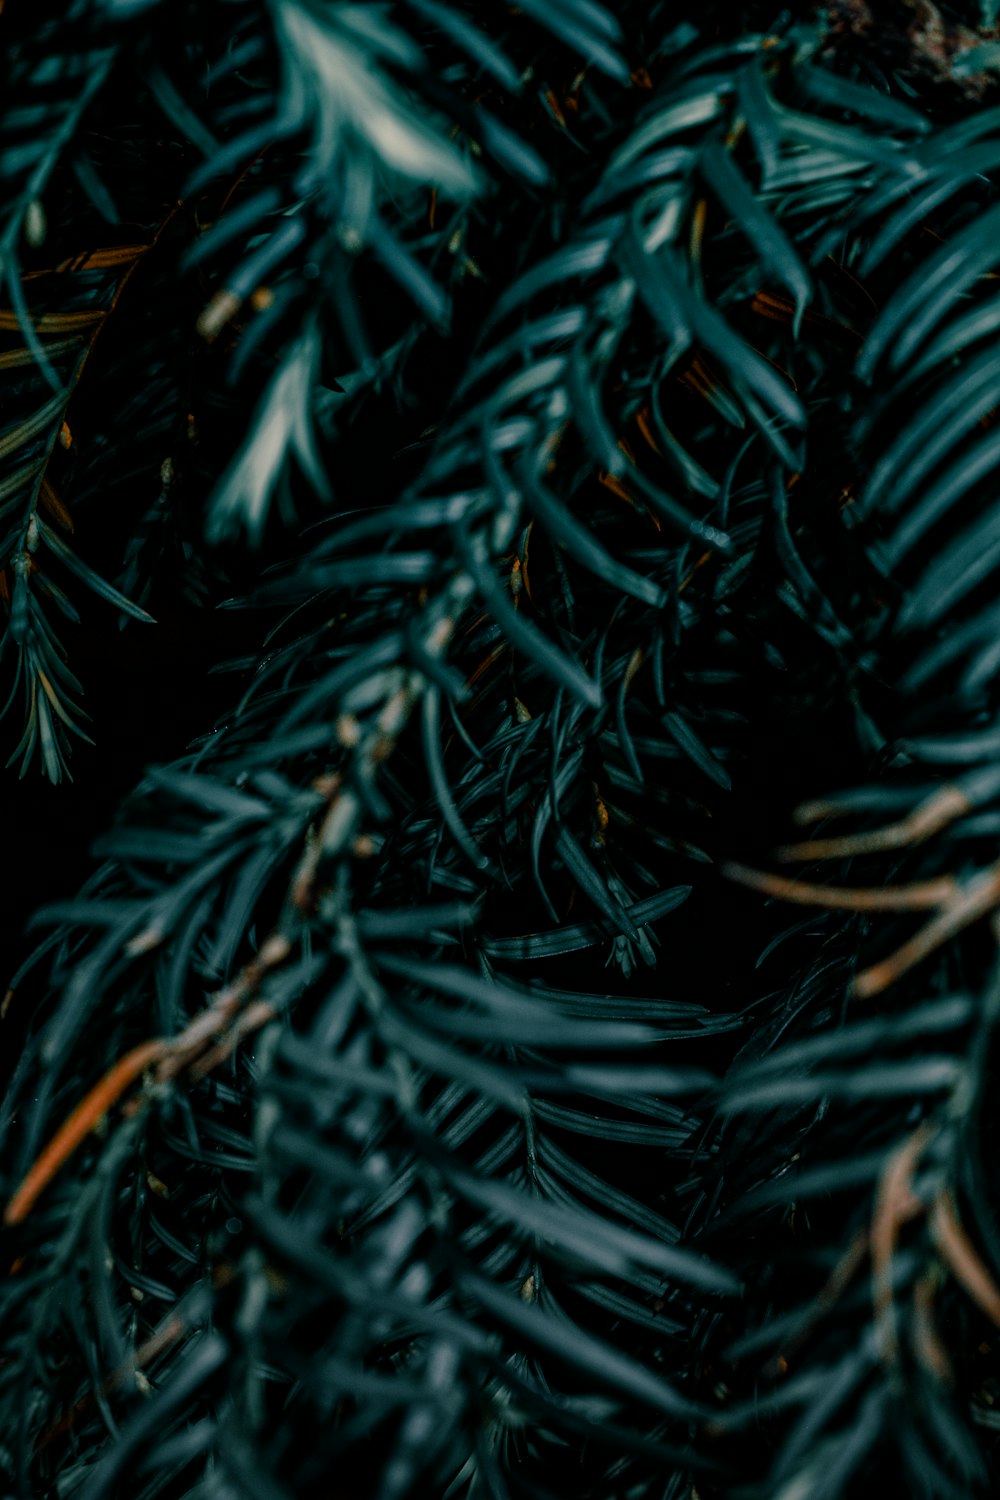 feuilles vertes en photographie en gros plan